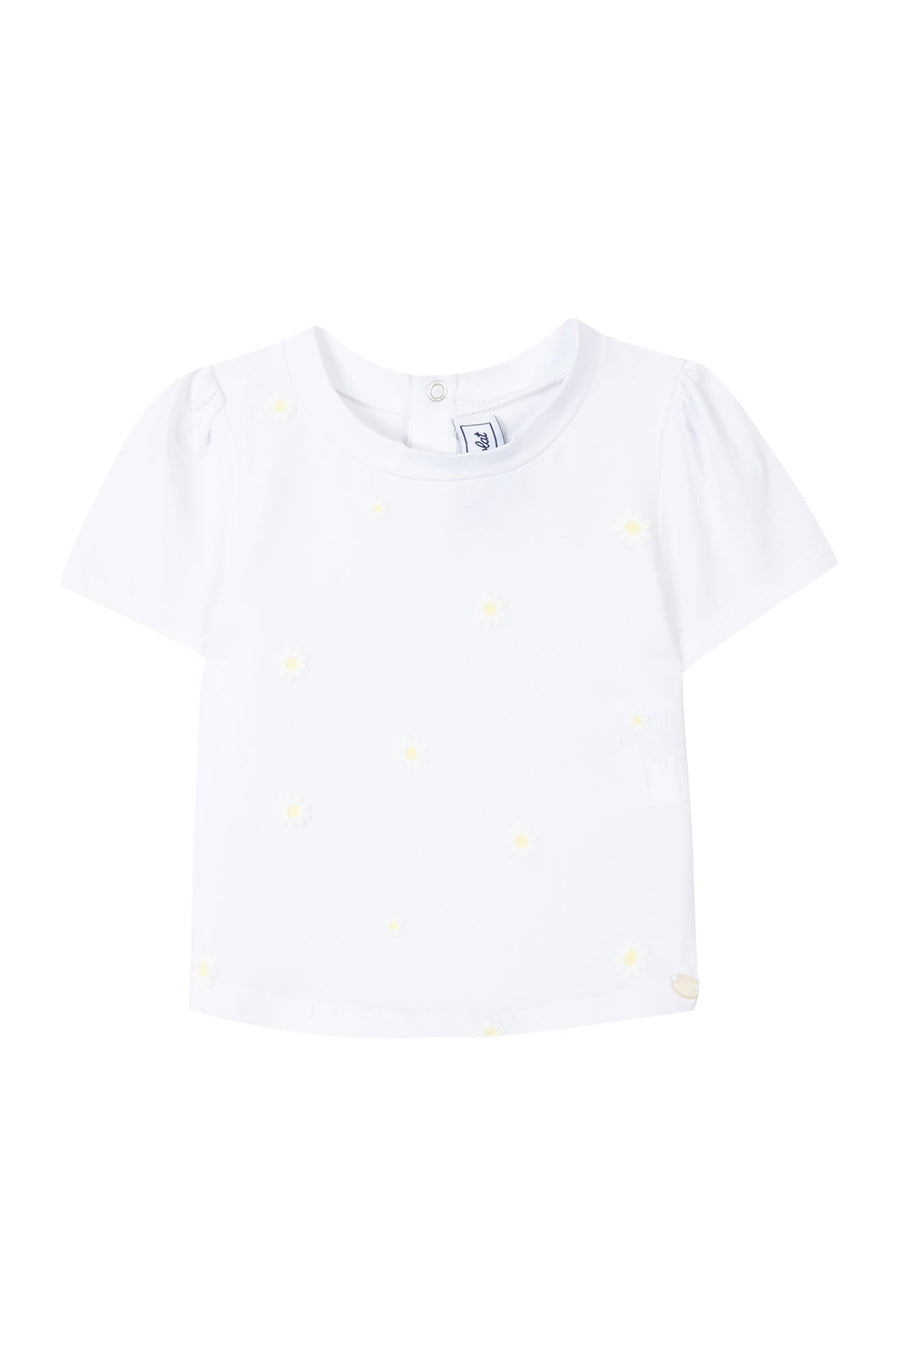 Tee-shirt blanc marguerites Tartine et Chocolat babygirl